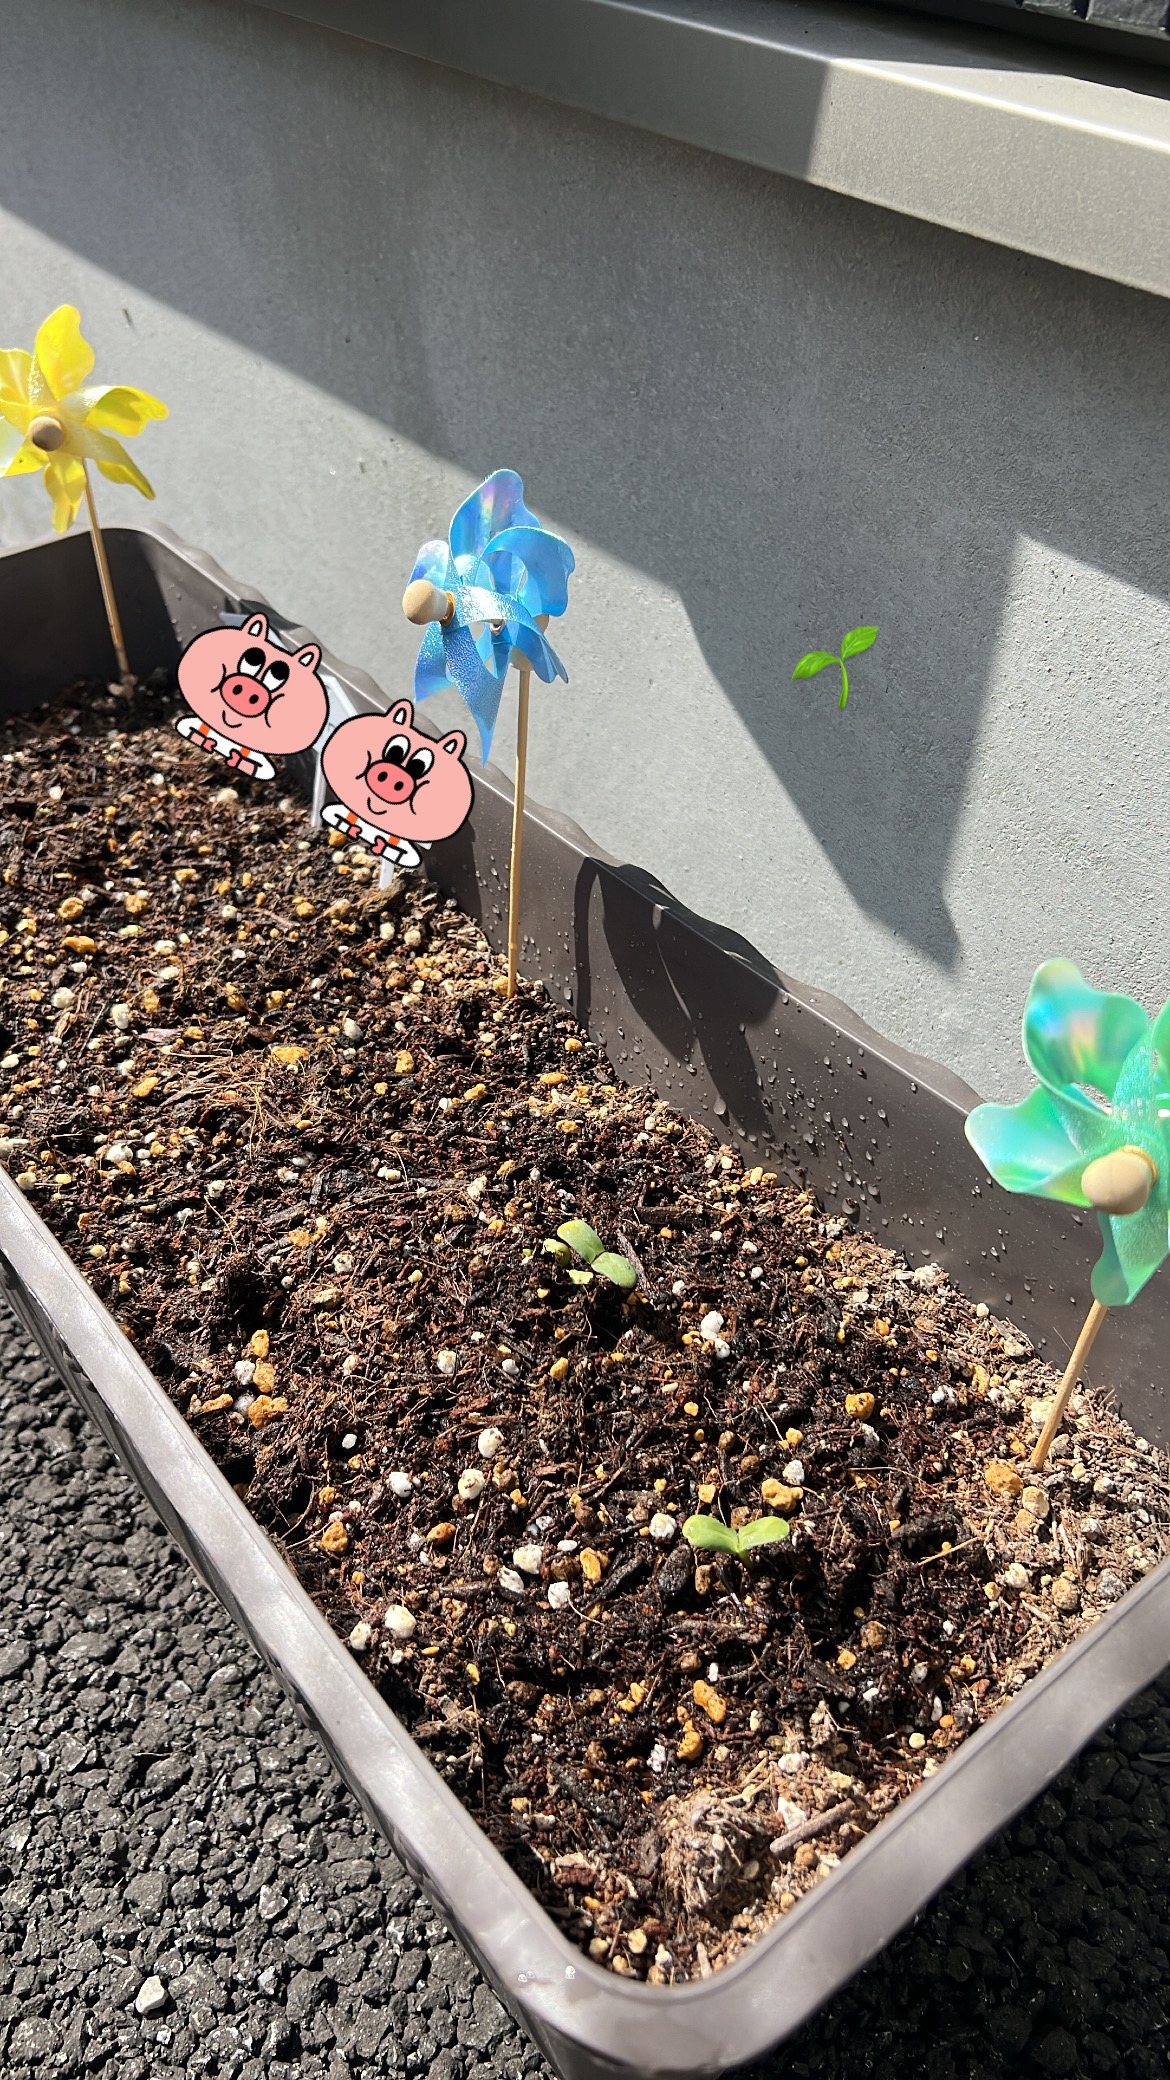 Sunflowers planted!